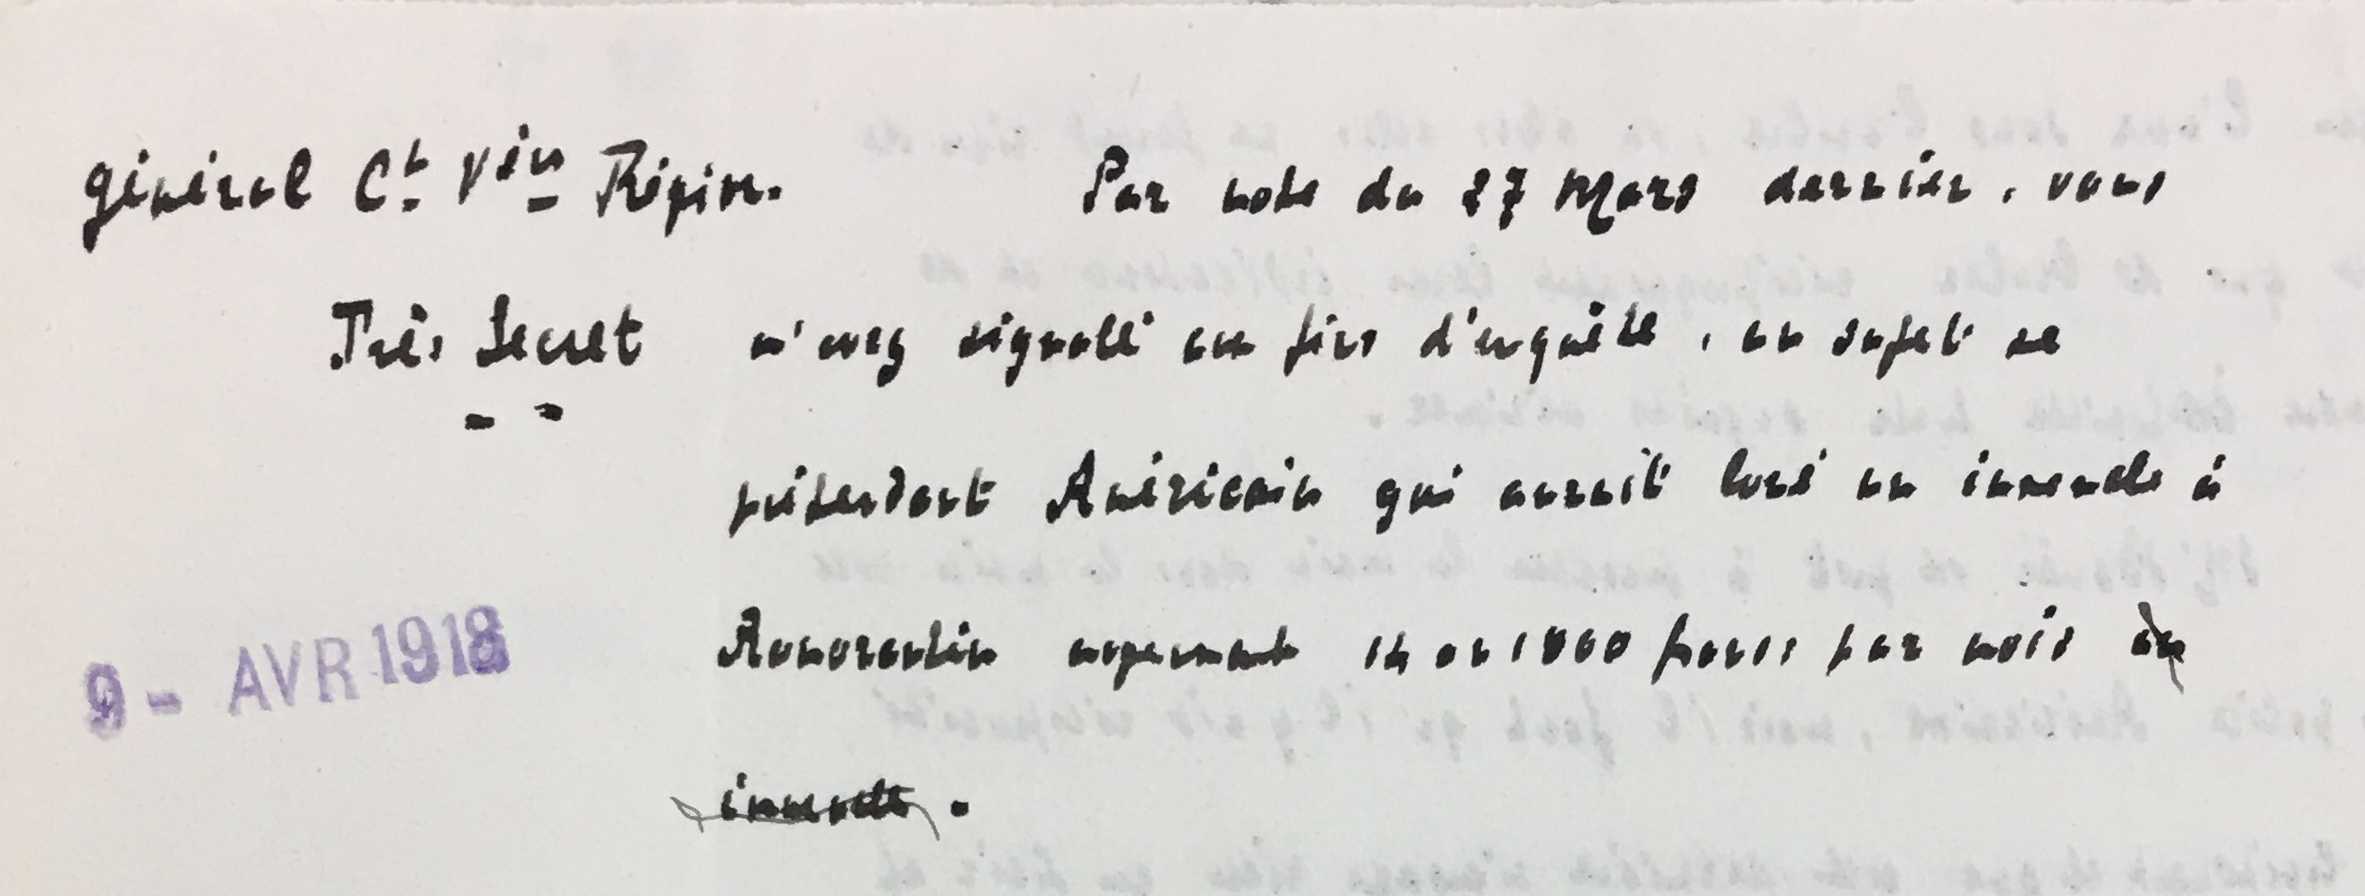 Manuscrit du Préfet Arnault. (Source, ADLC)